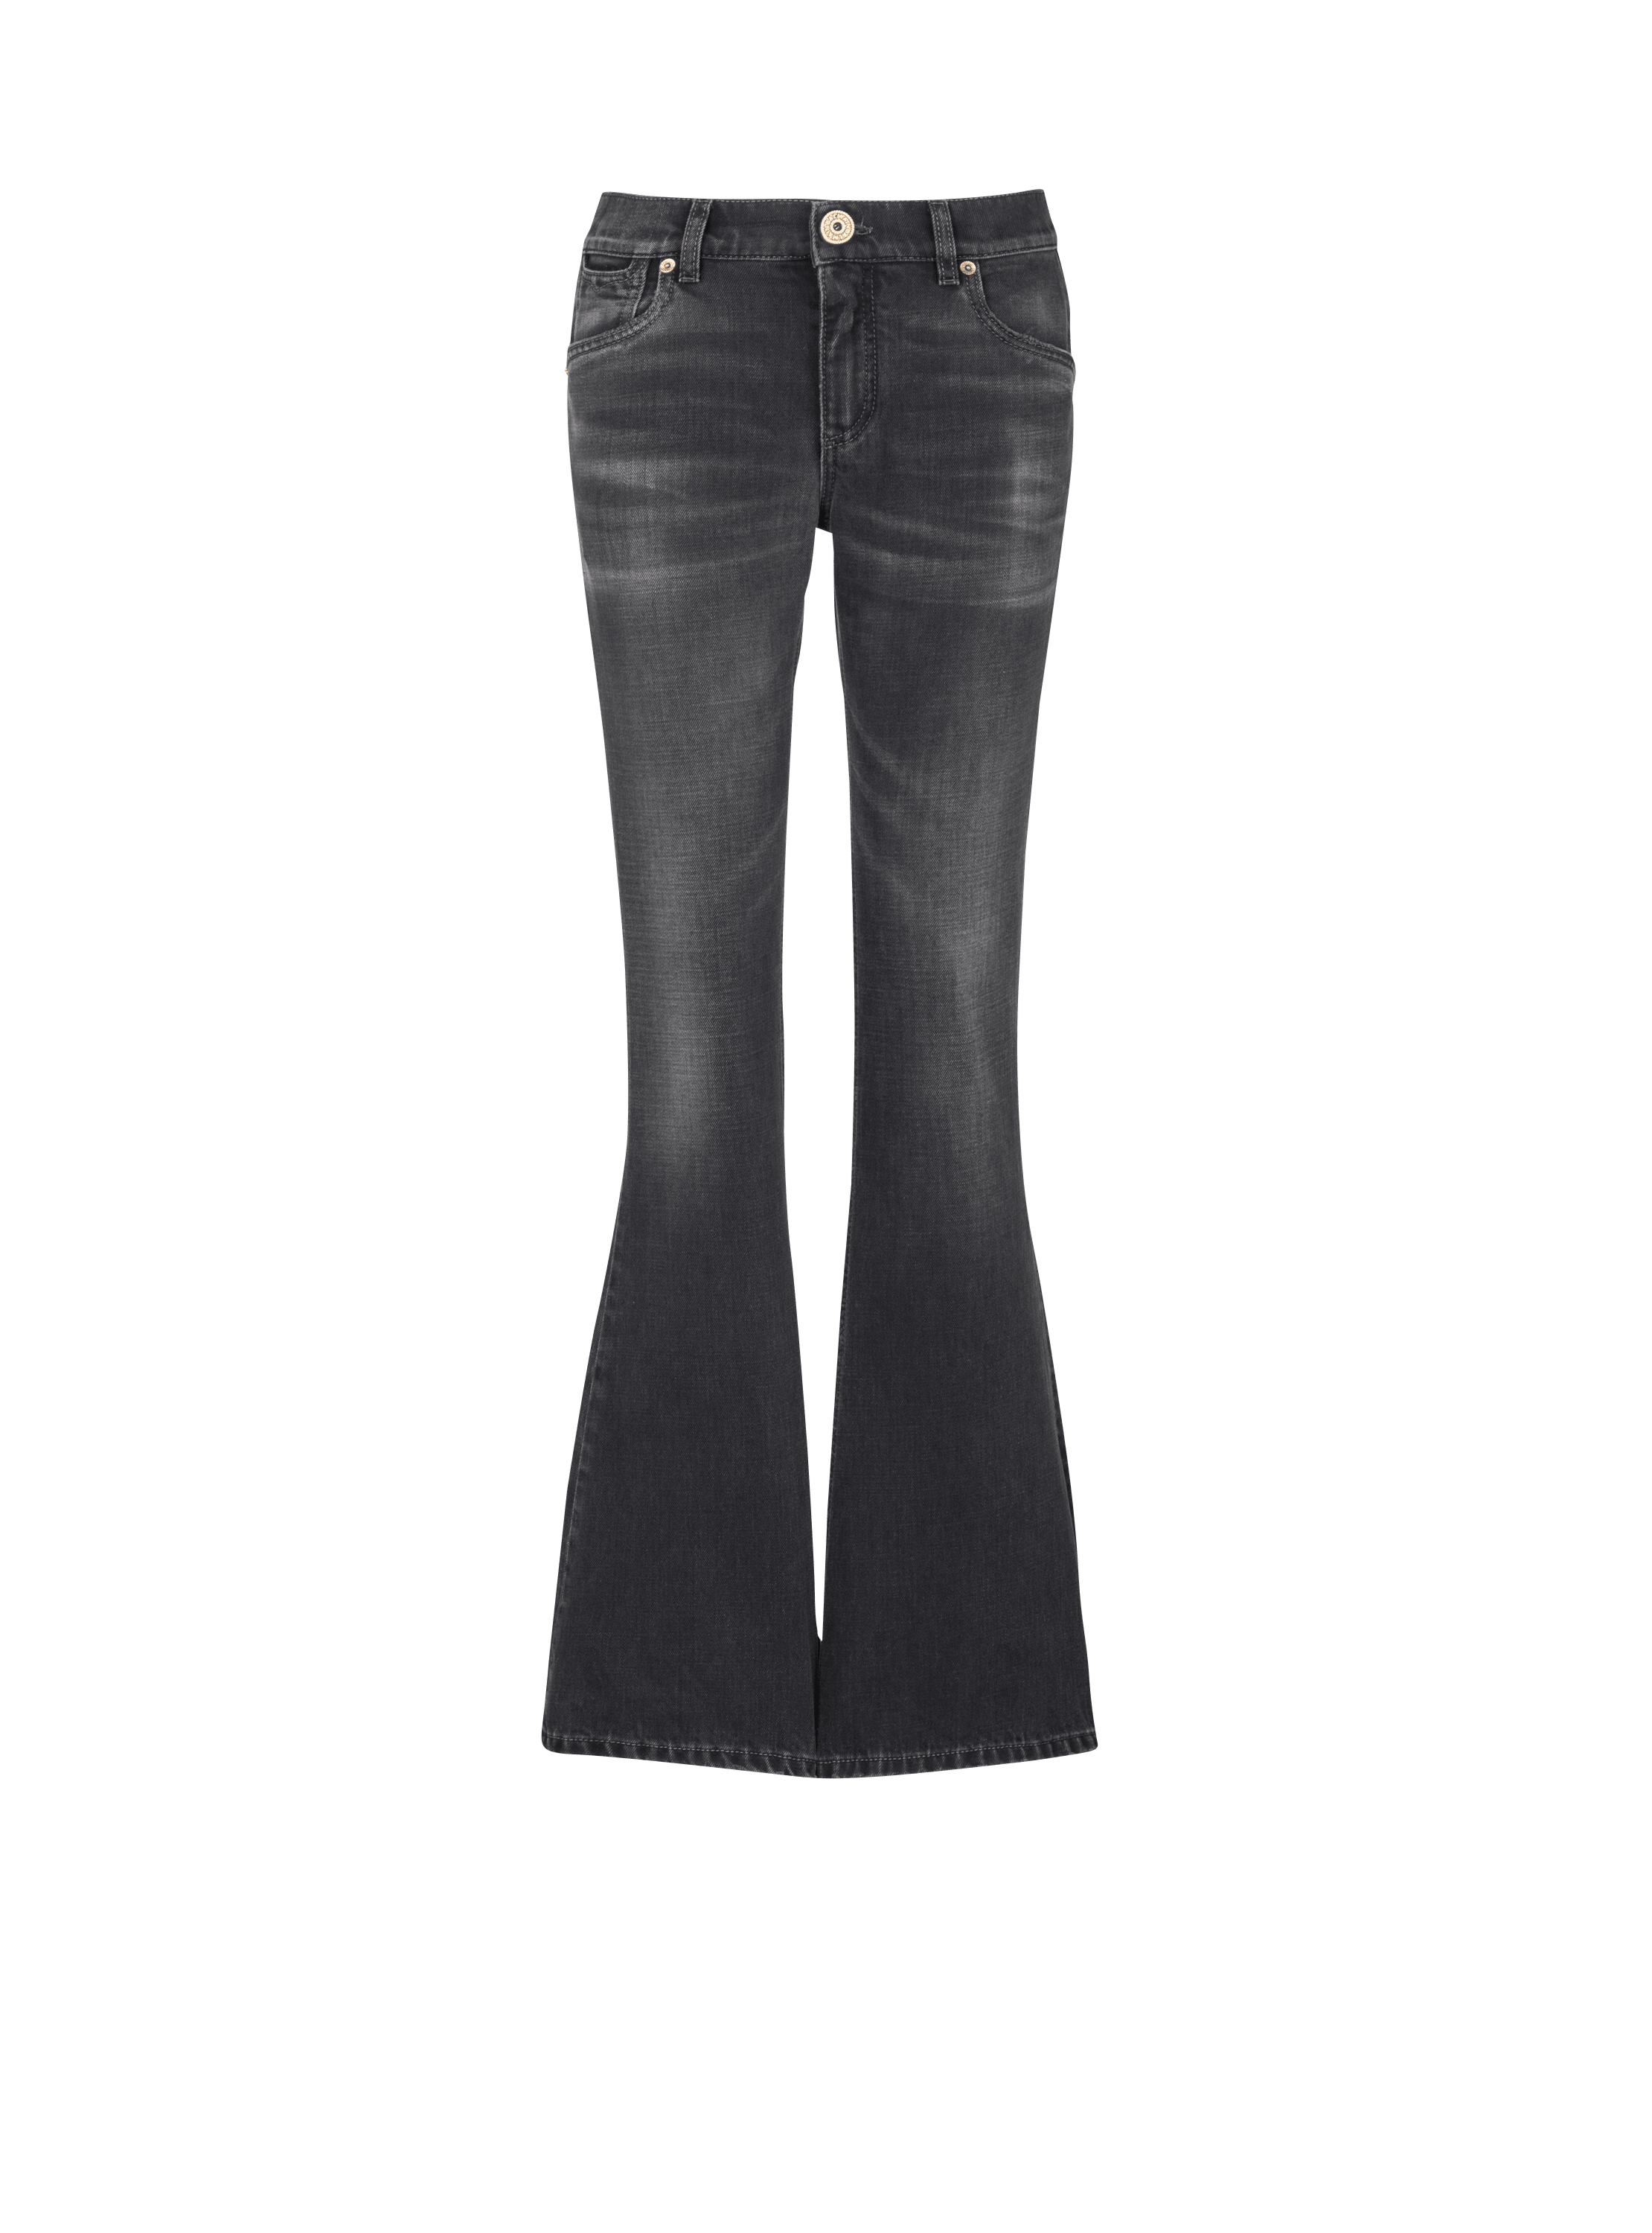 Western Bootcut-Jeans, schwarz, hi-res